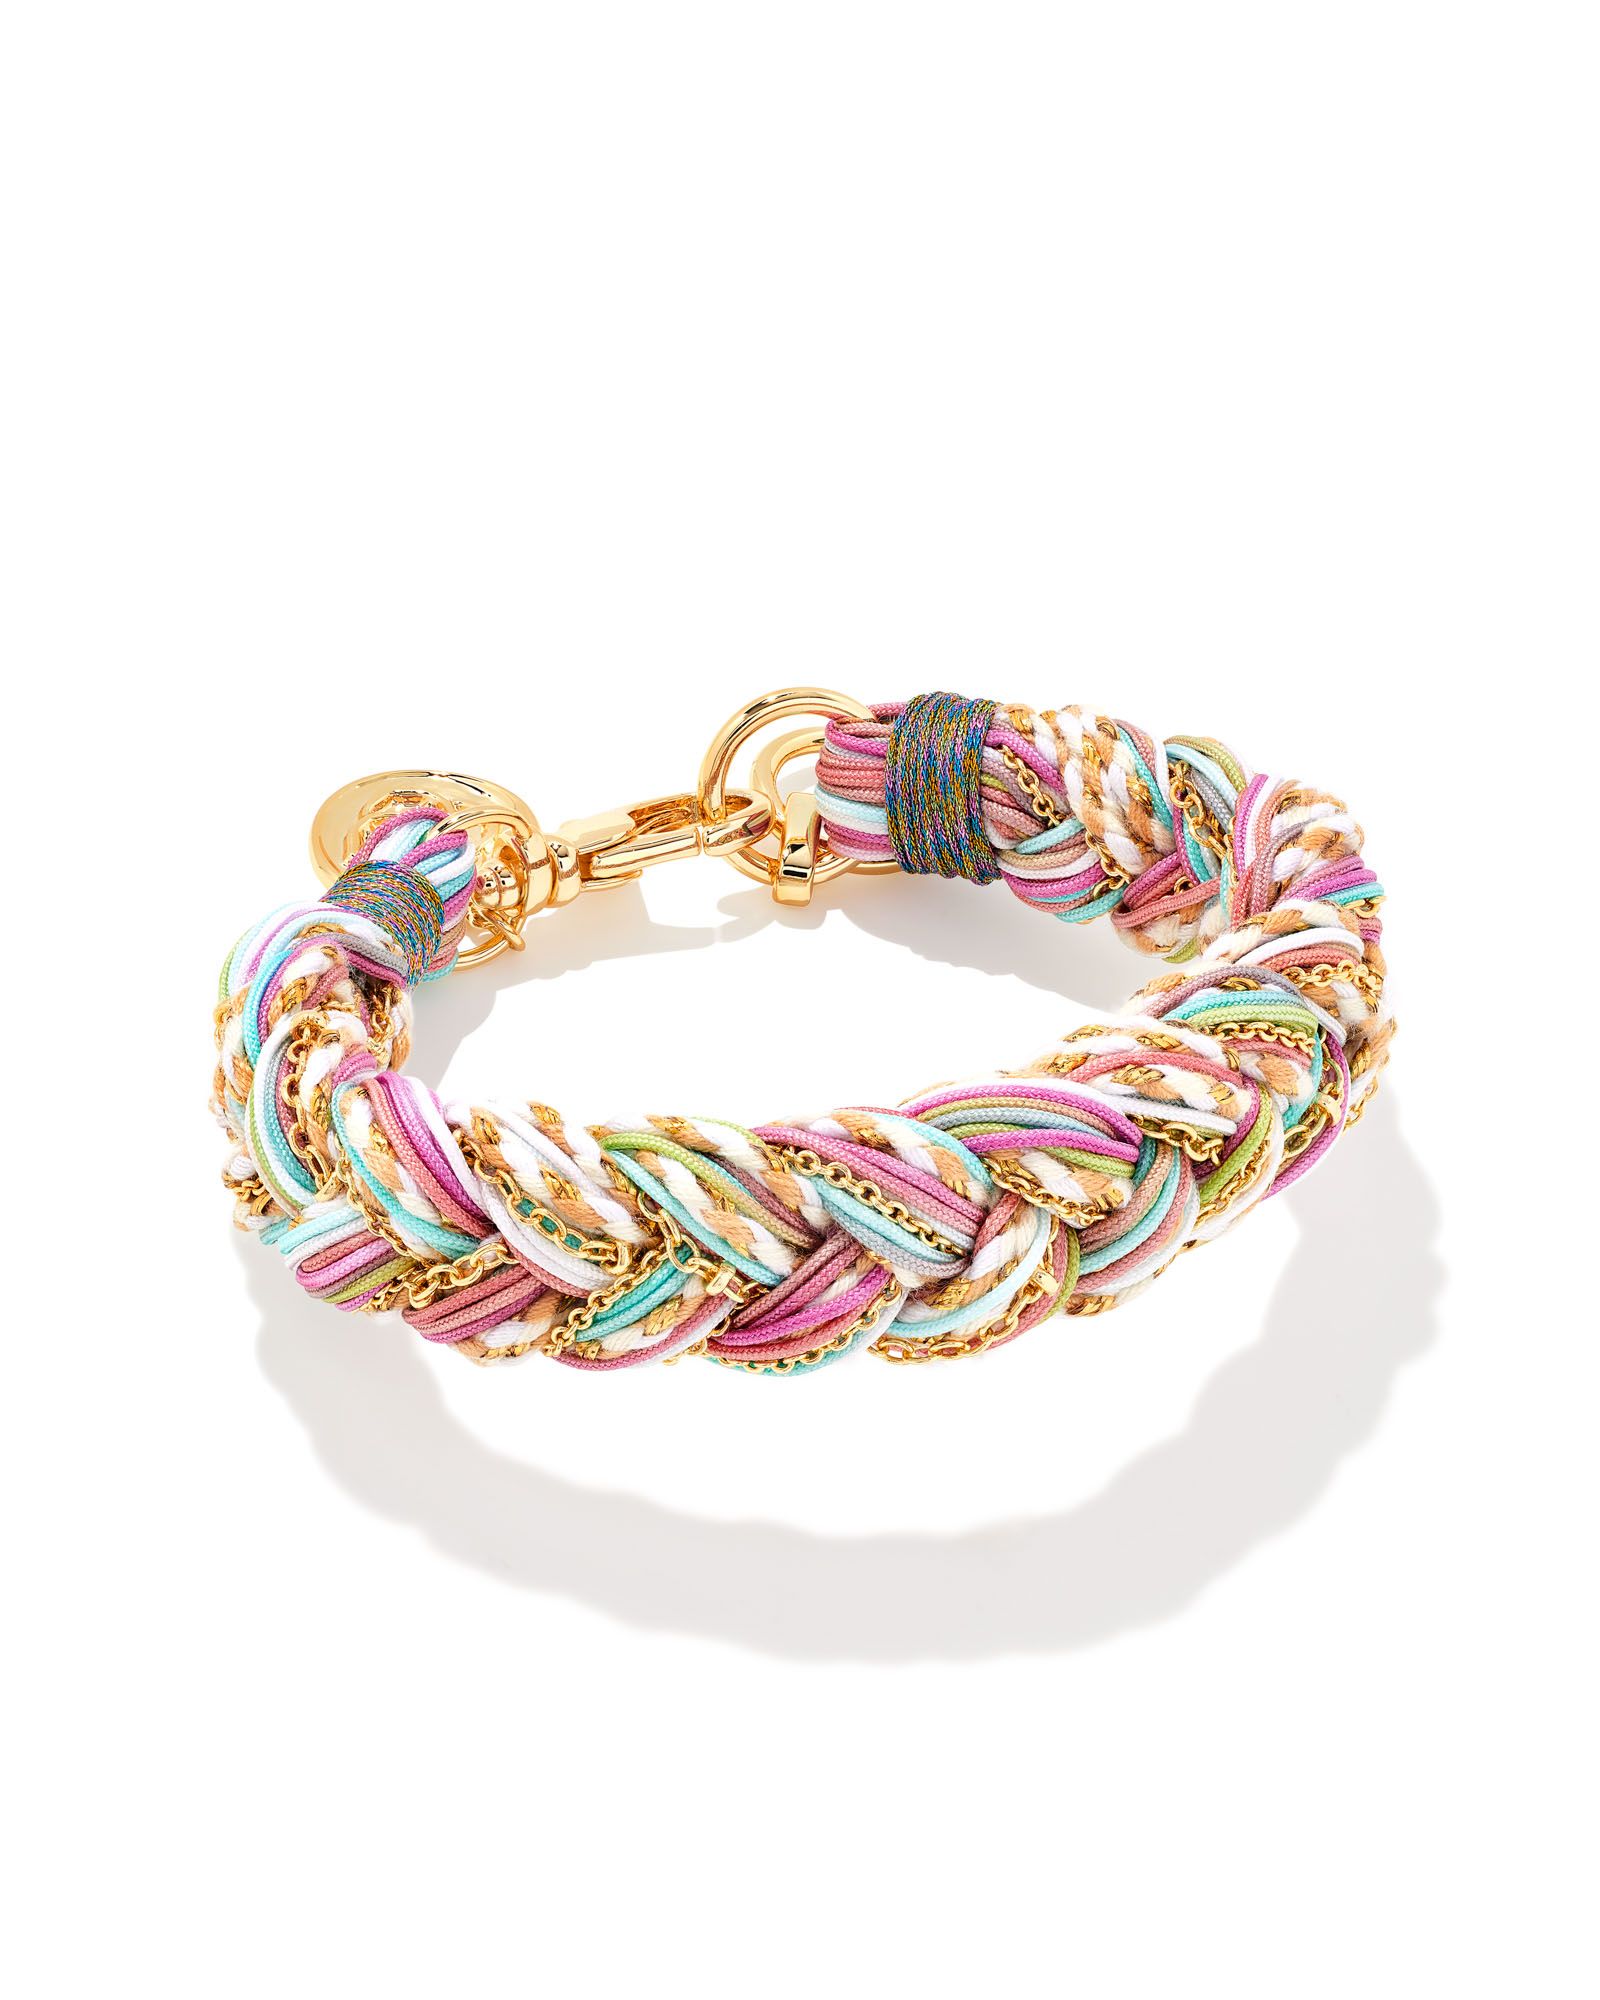 Masie Gold Corded Friendship Bracelet in Pastel Mix | Kendra Scott